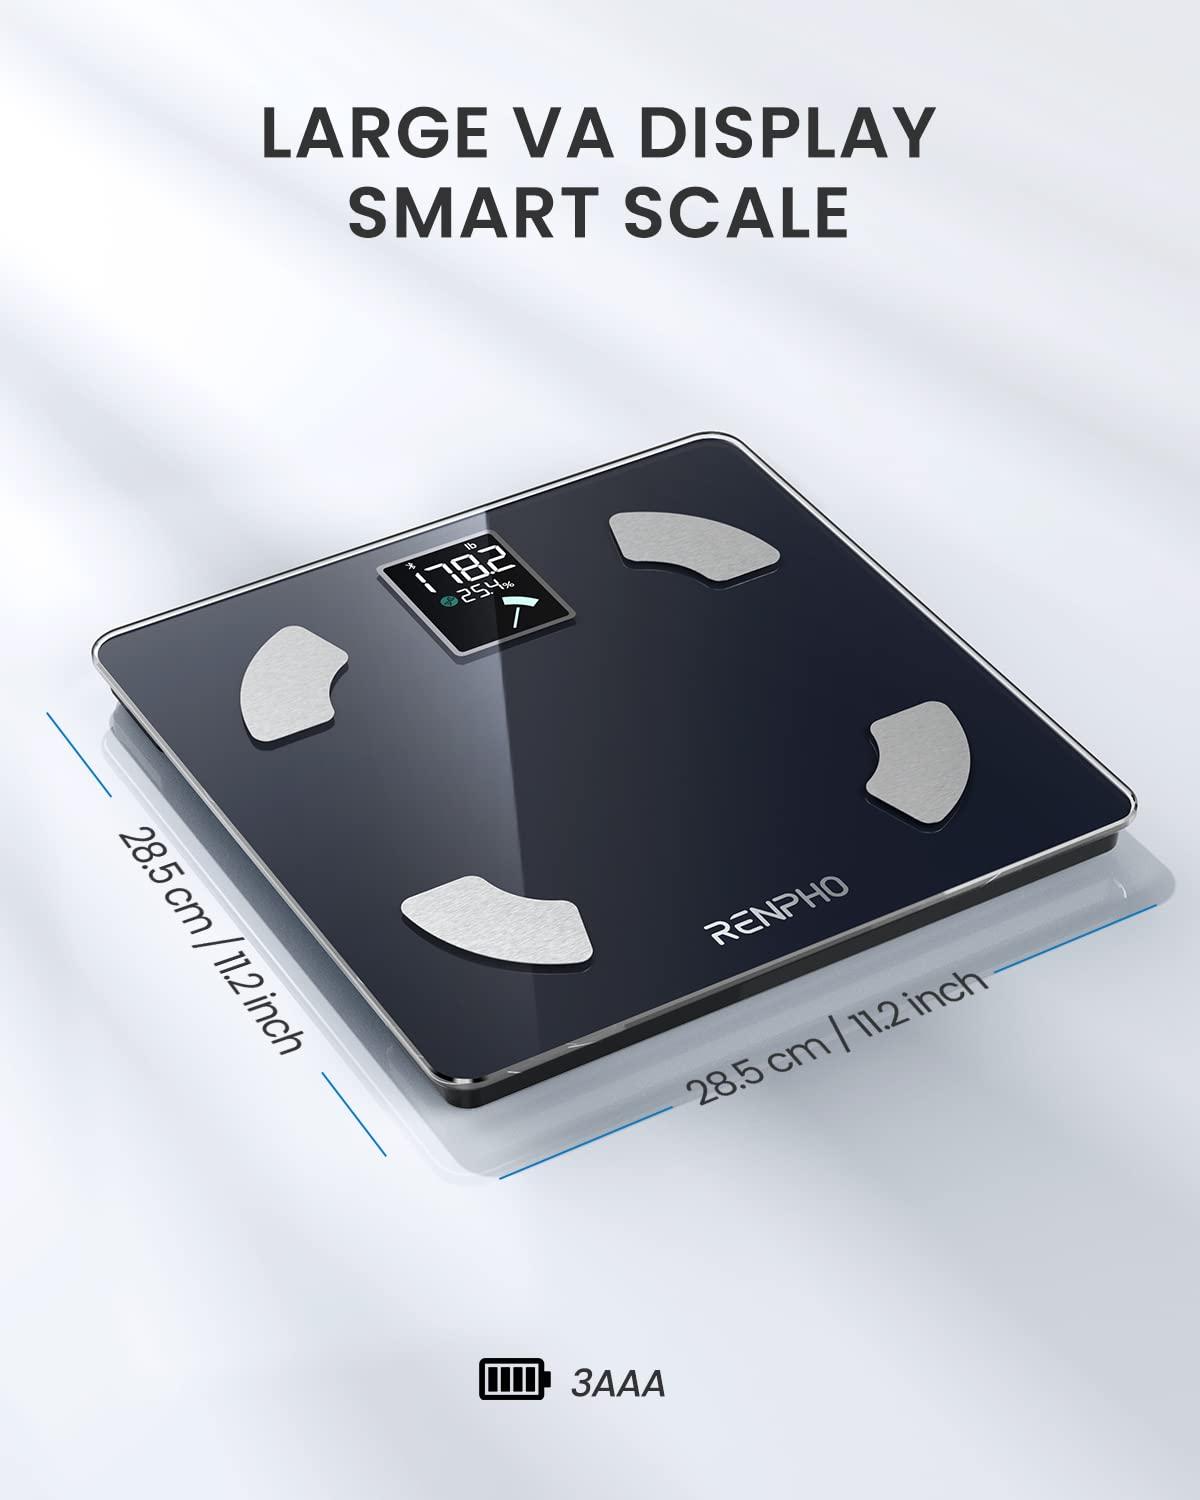 RENPHO Bluetooth Body Fat Scale Digital Weight Scale Bathroom